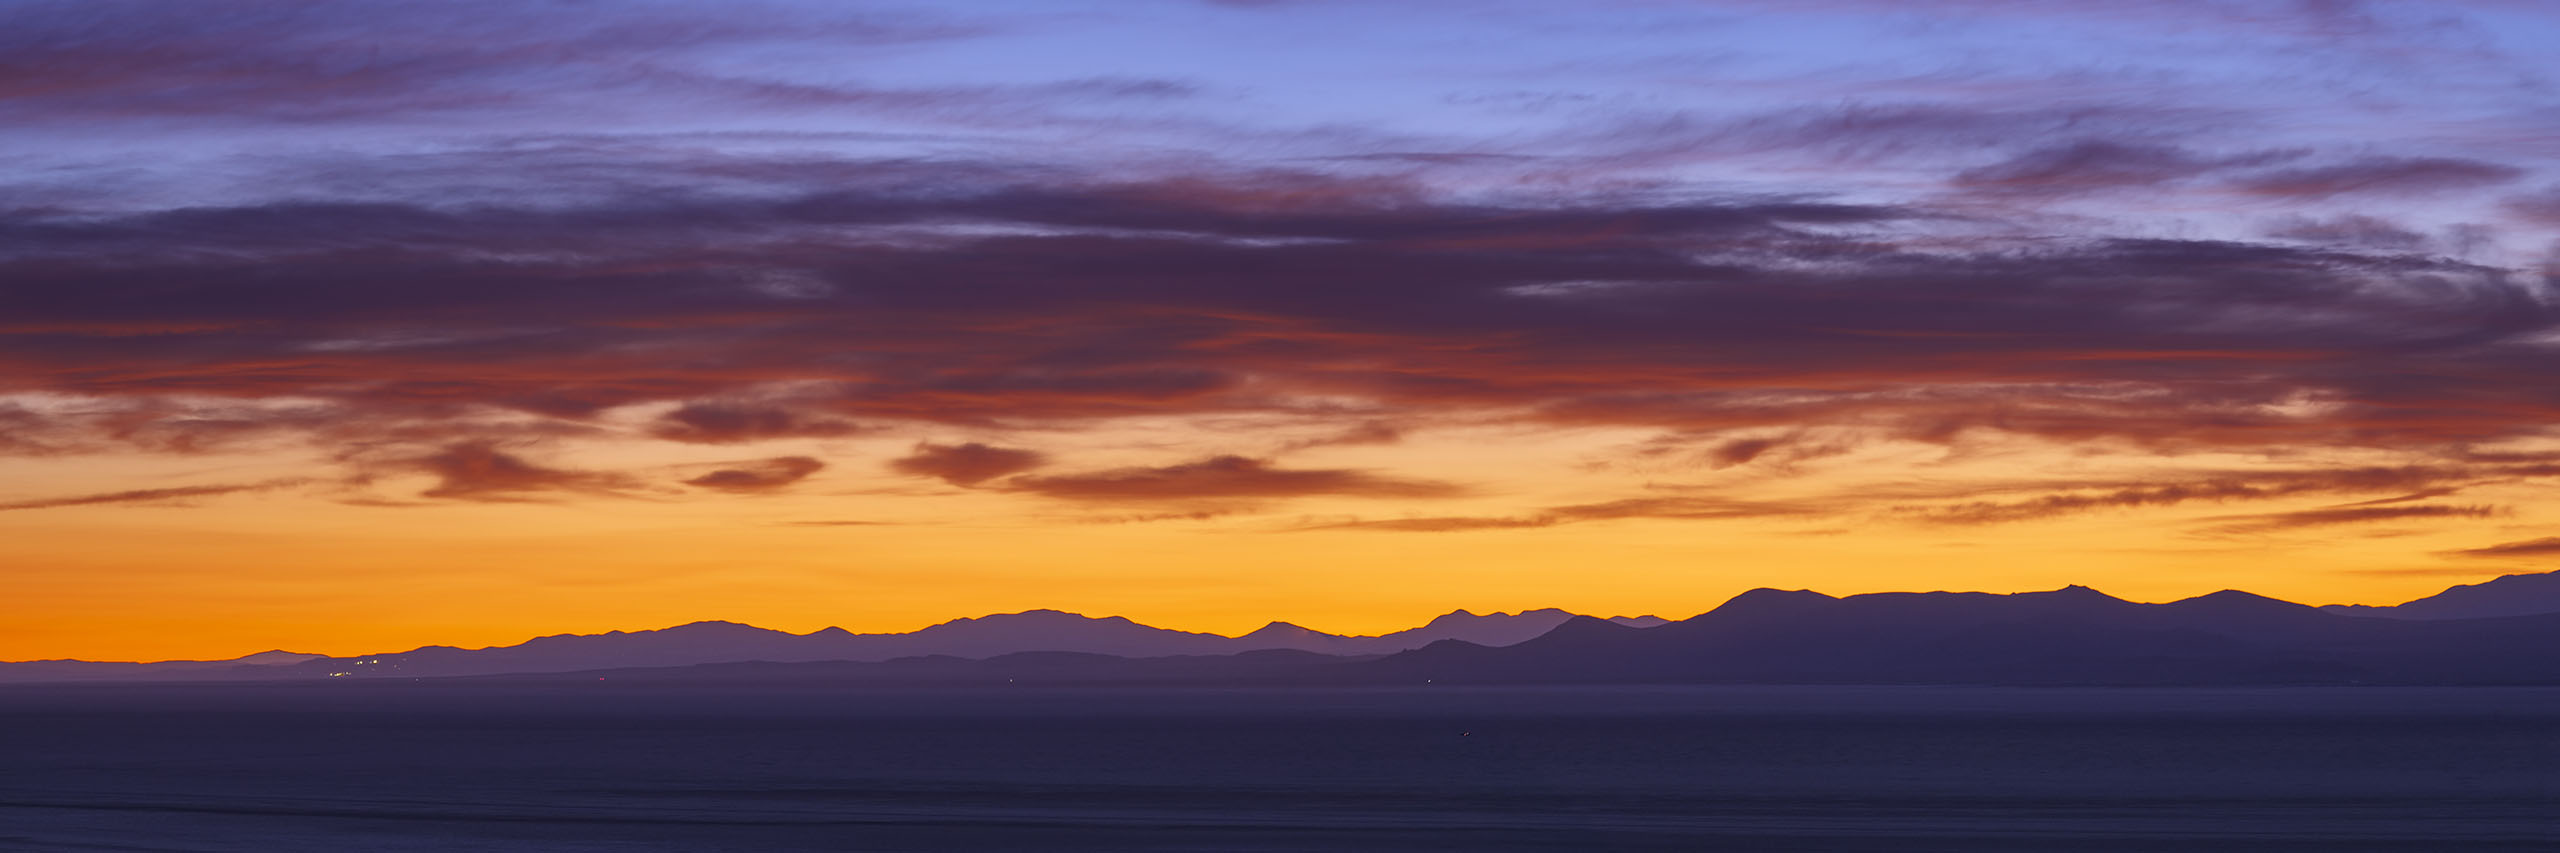 Sunset on the black rock desert playa Gerlach Nevada Jungo road